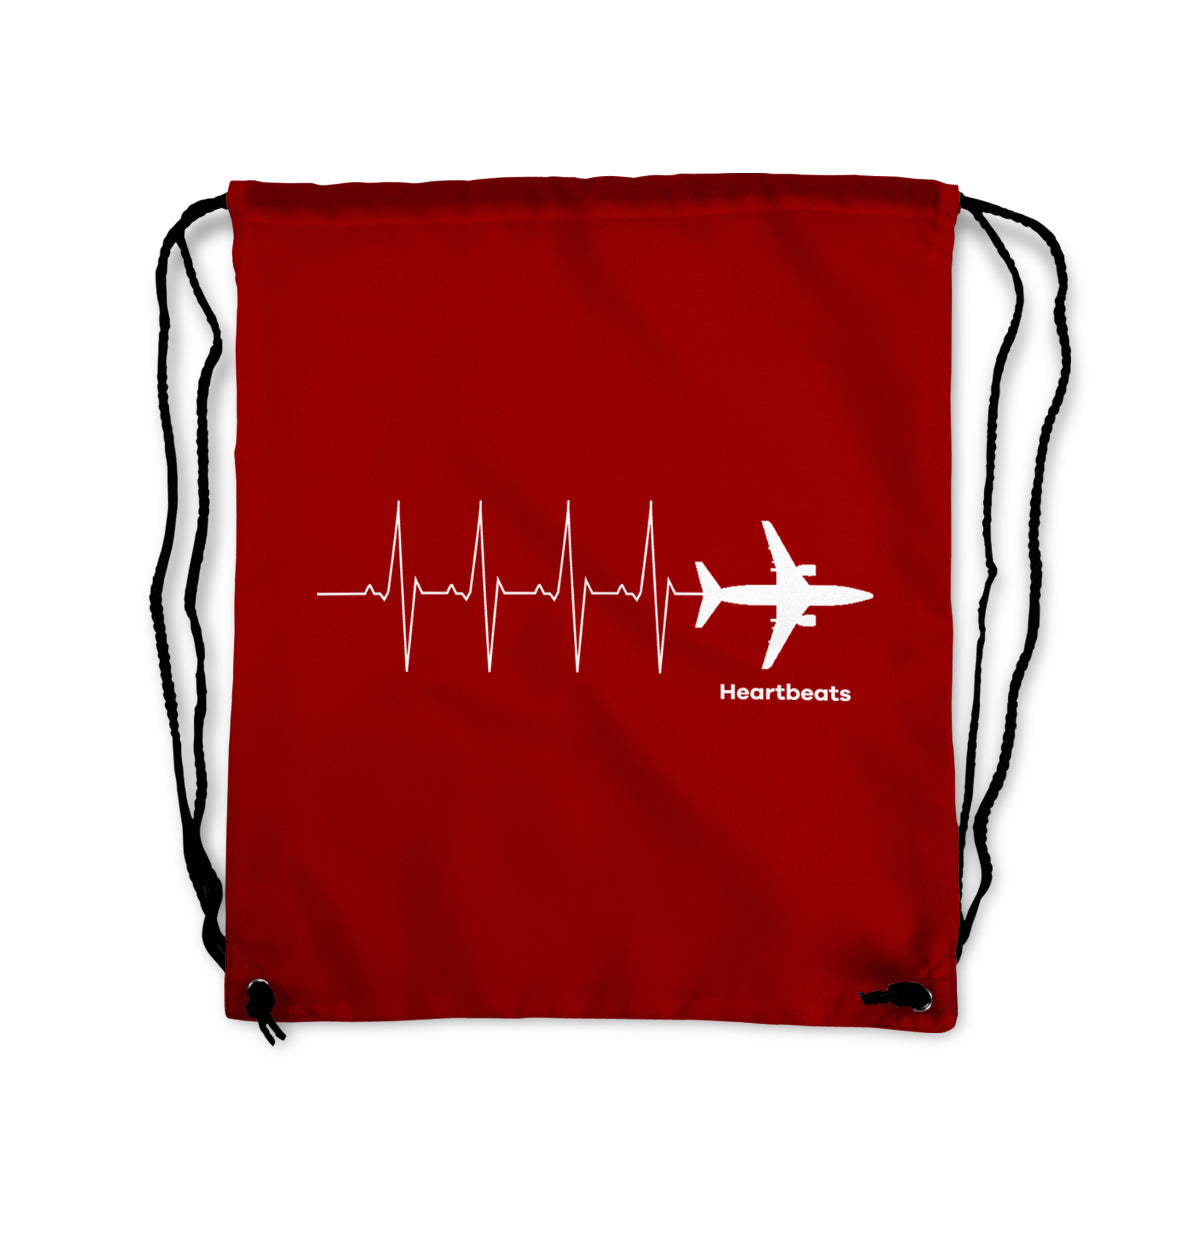 Aviation Heartbeats Designed Drawstring Bags